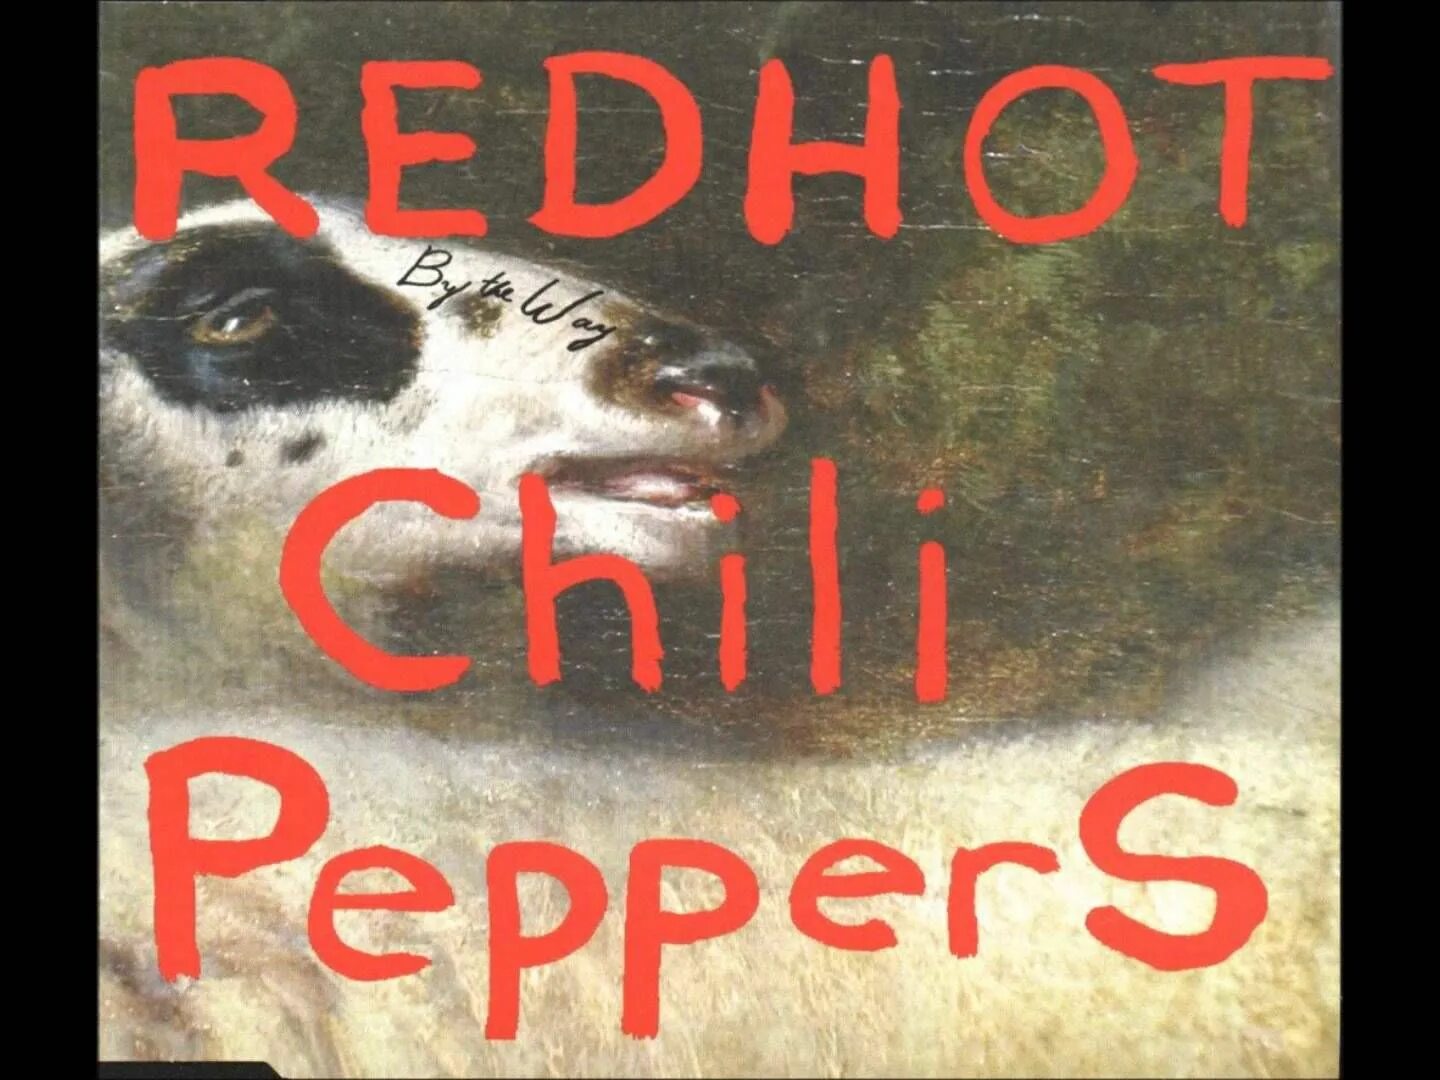 Перевод песни red pepper. Red hot Chili Peppers 2002 by the way. Red hot Chili Peppers обложка. By the way Red hot Chili Peppers обложка. Red hot Chili Peppers обложки альбомов.